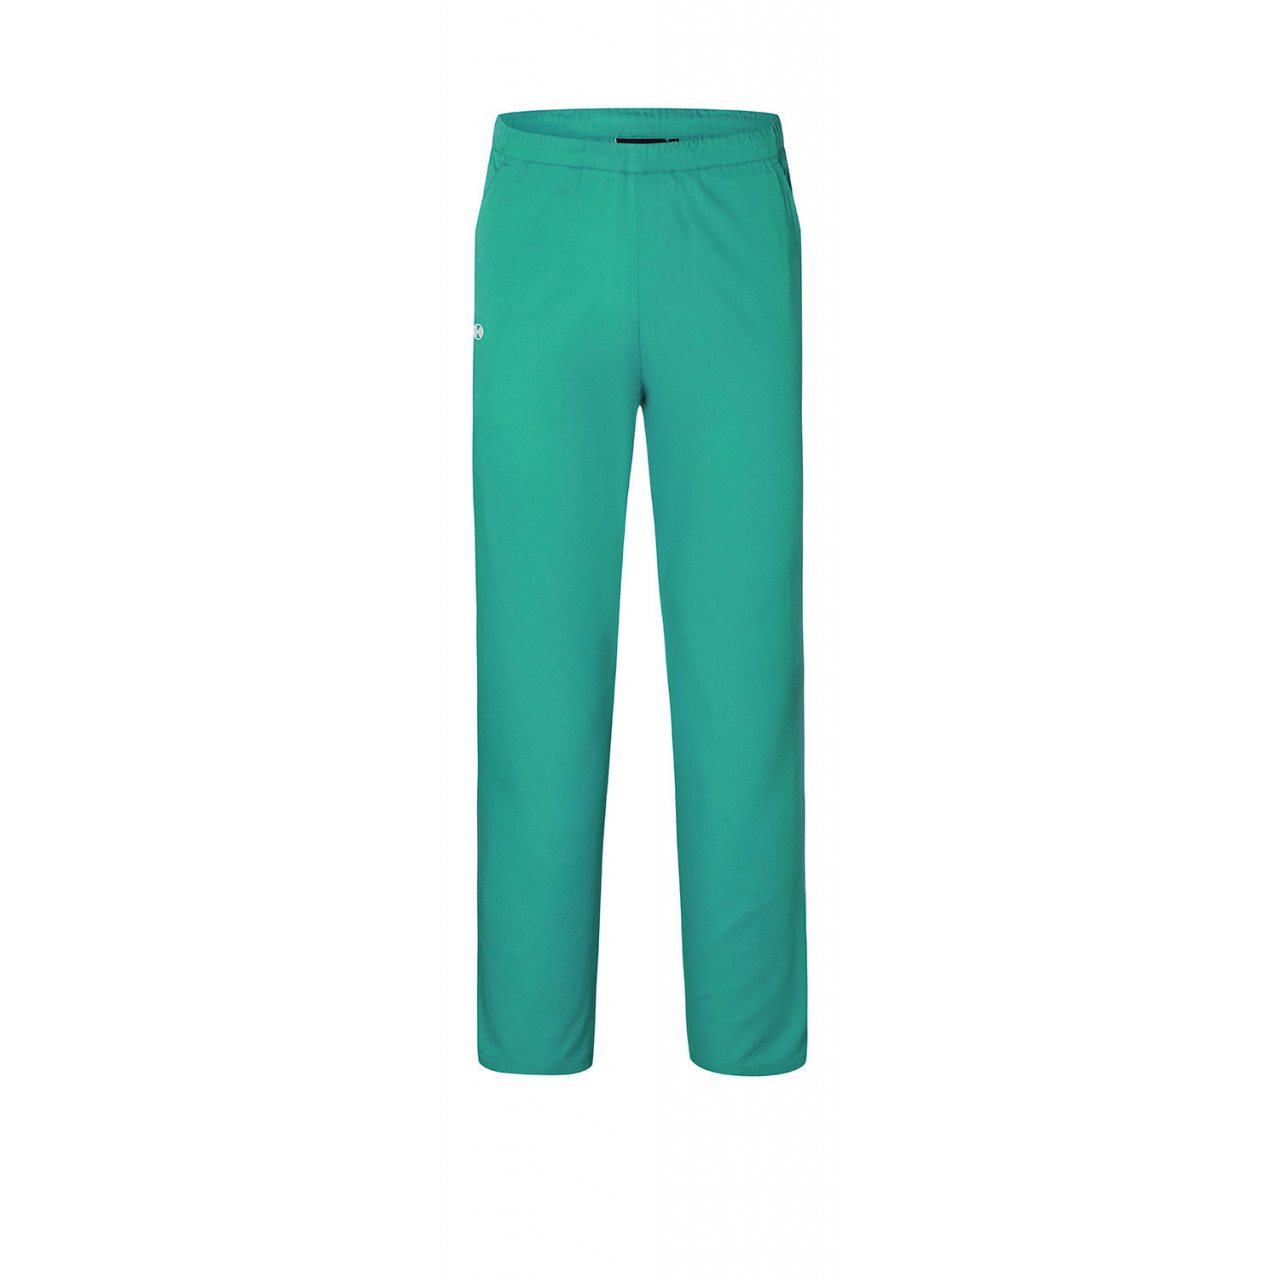 Kalhoty Karlowsky Essential - zelené, S